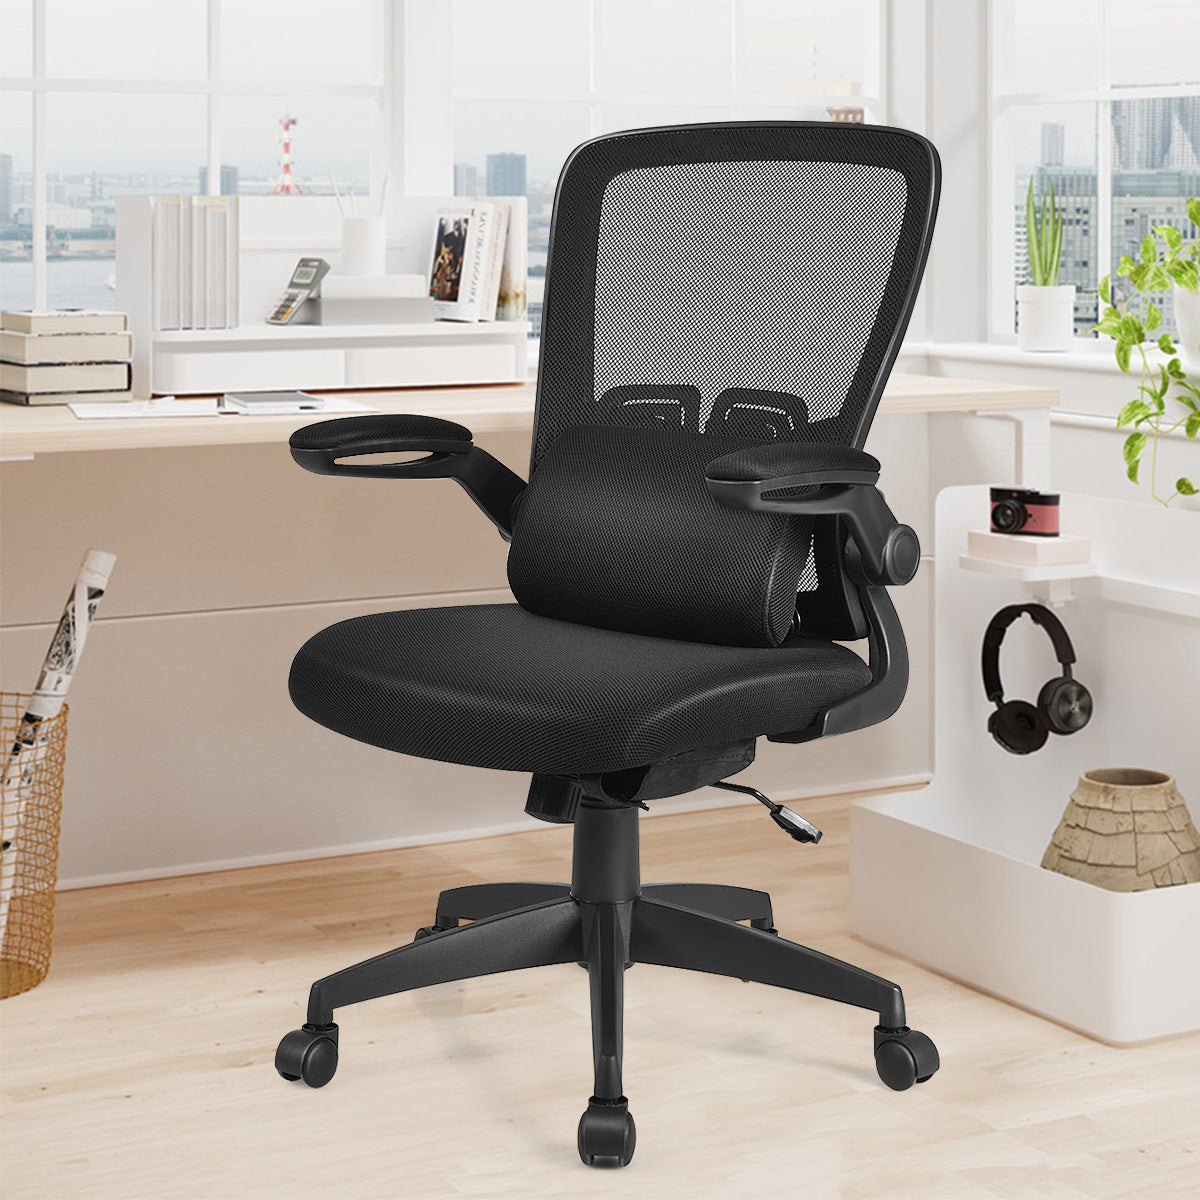 Giantex Ergonomic Desk Chair w/ Portable Lumbar Pillow (Black)